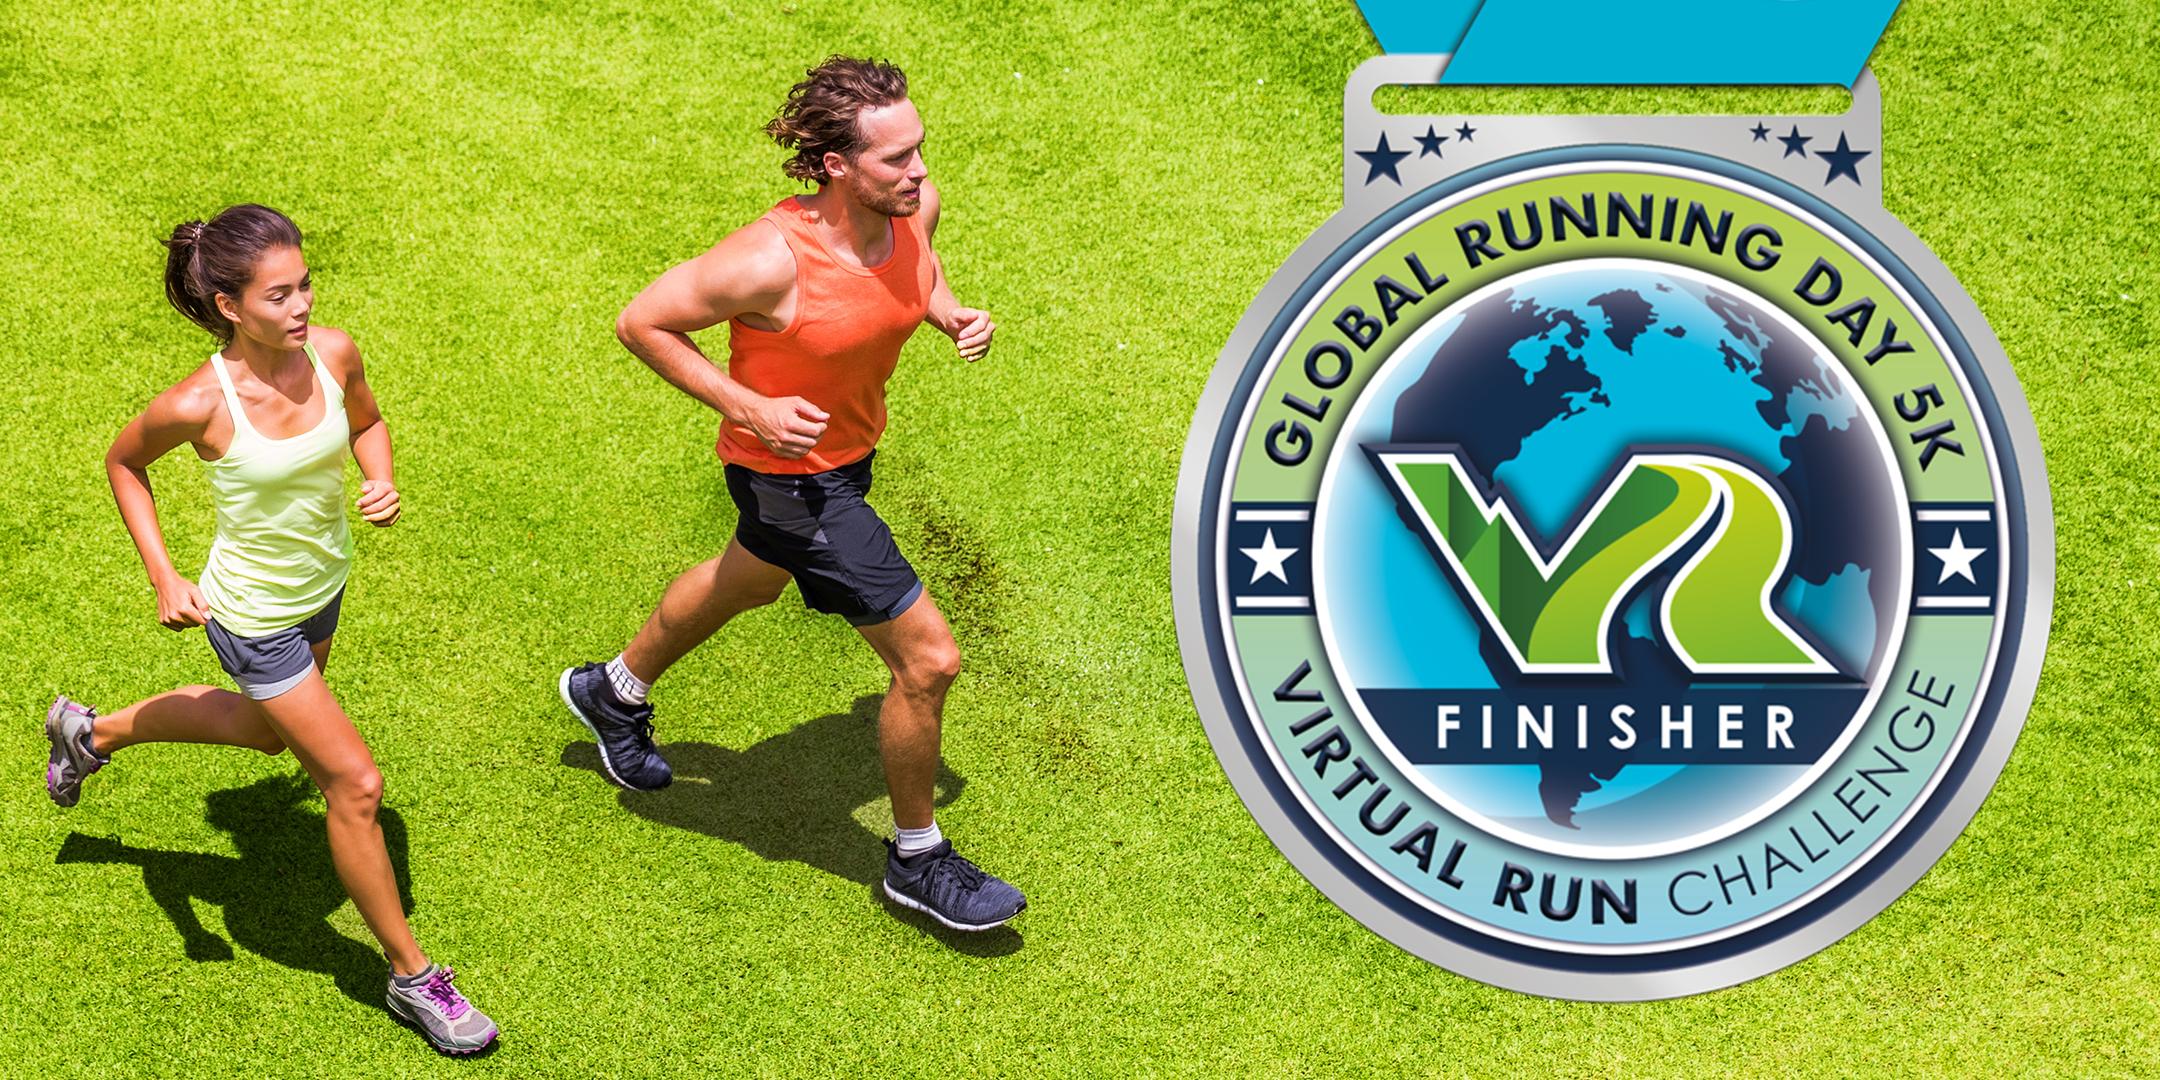 2020 Global Running Day Free Virtual 5k - Chattanooga